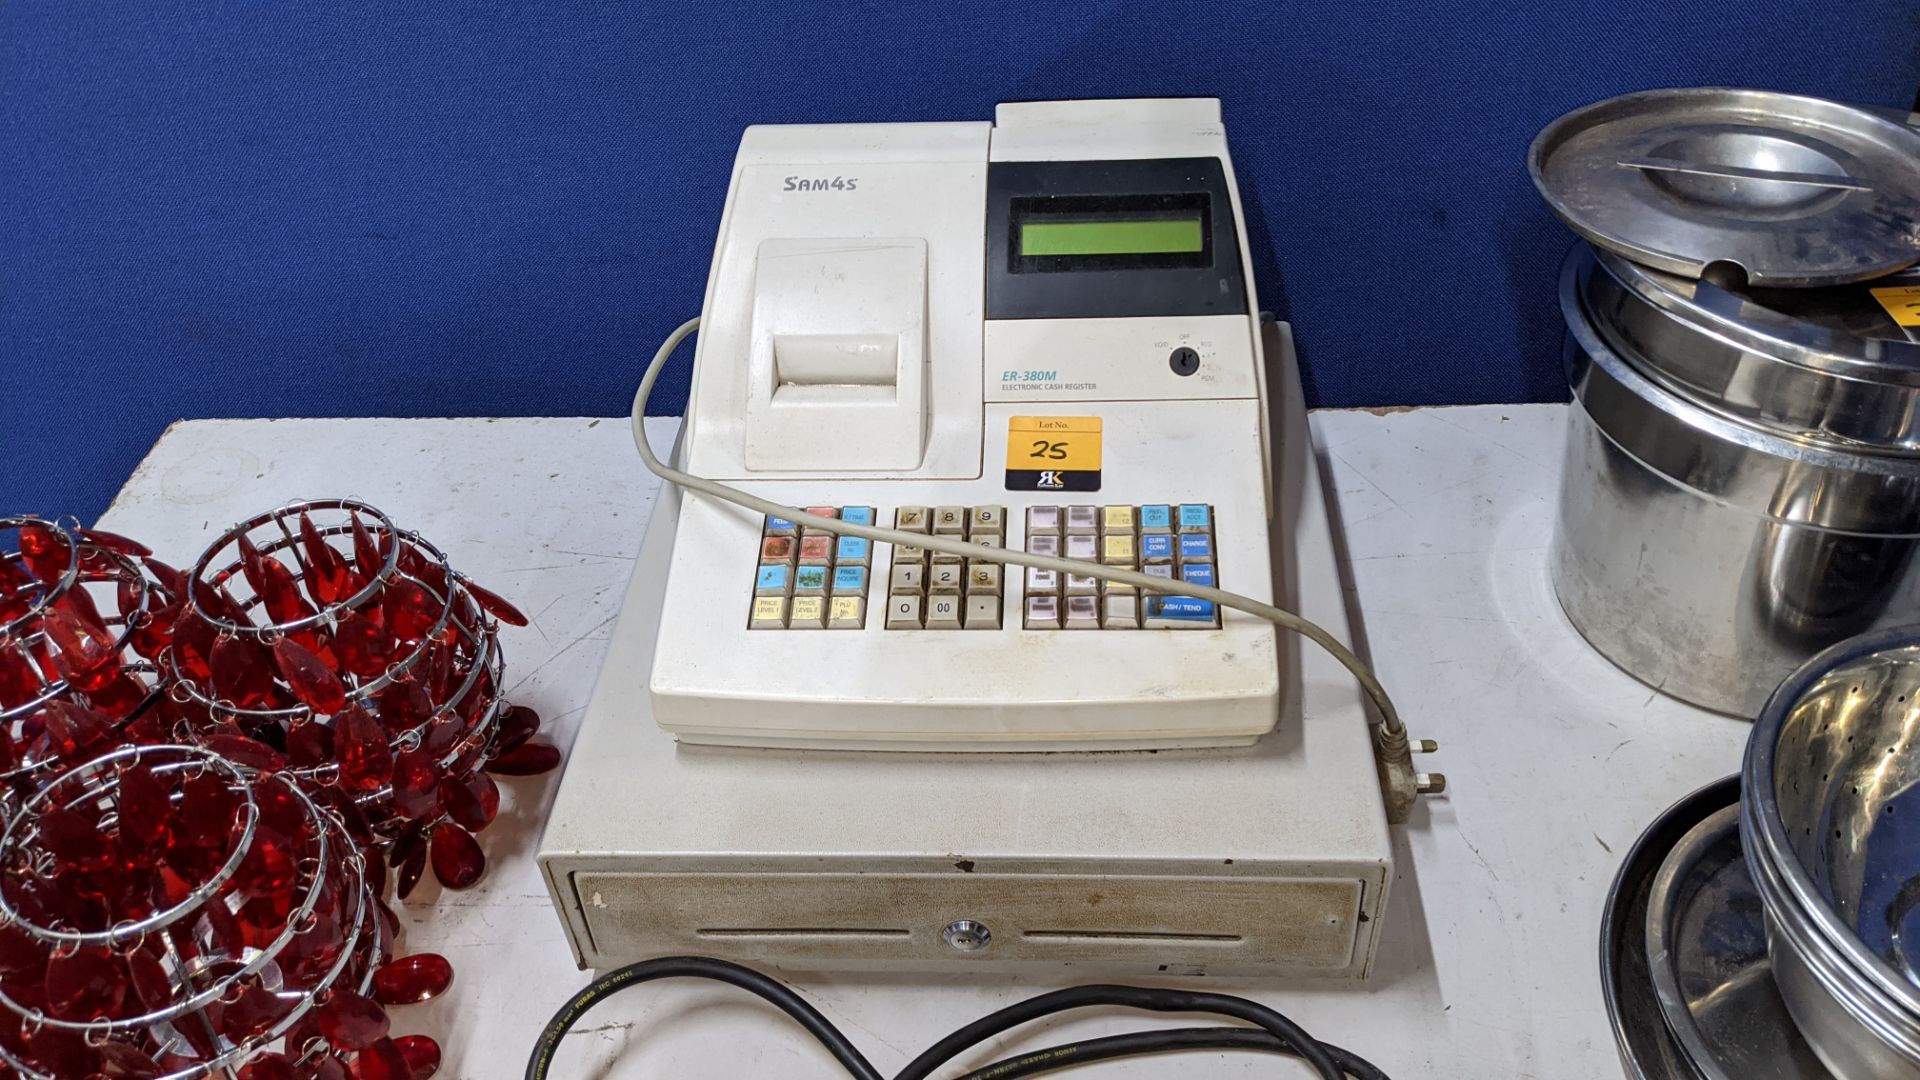 Sam4S model ER-380M electronic cash register